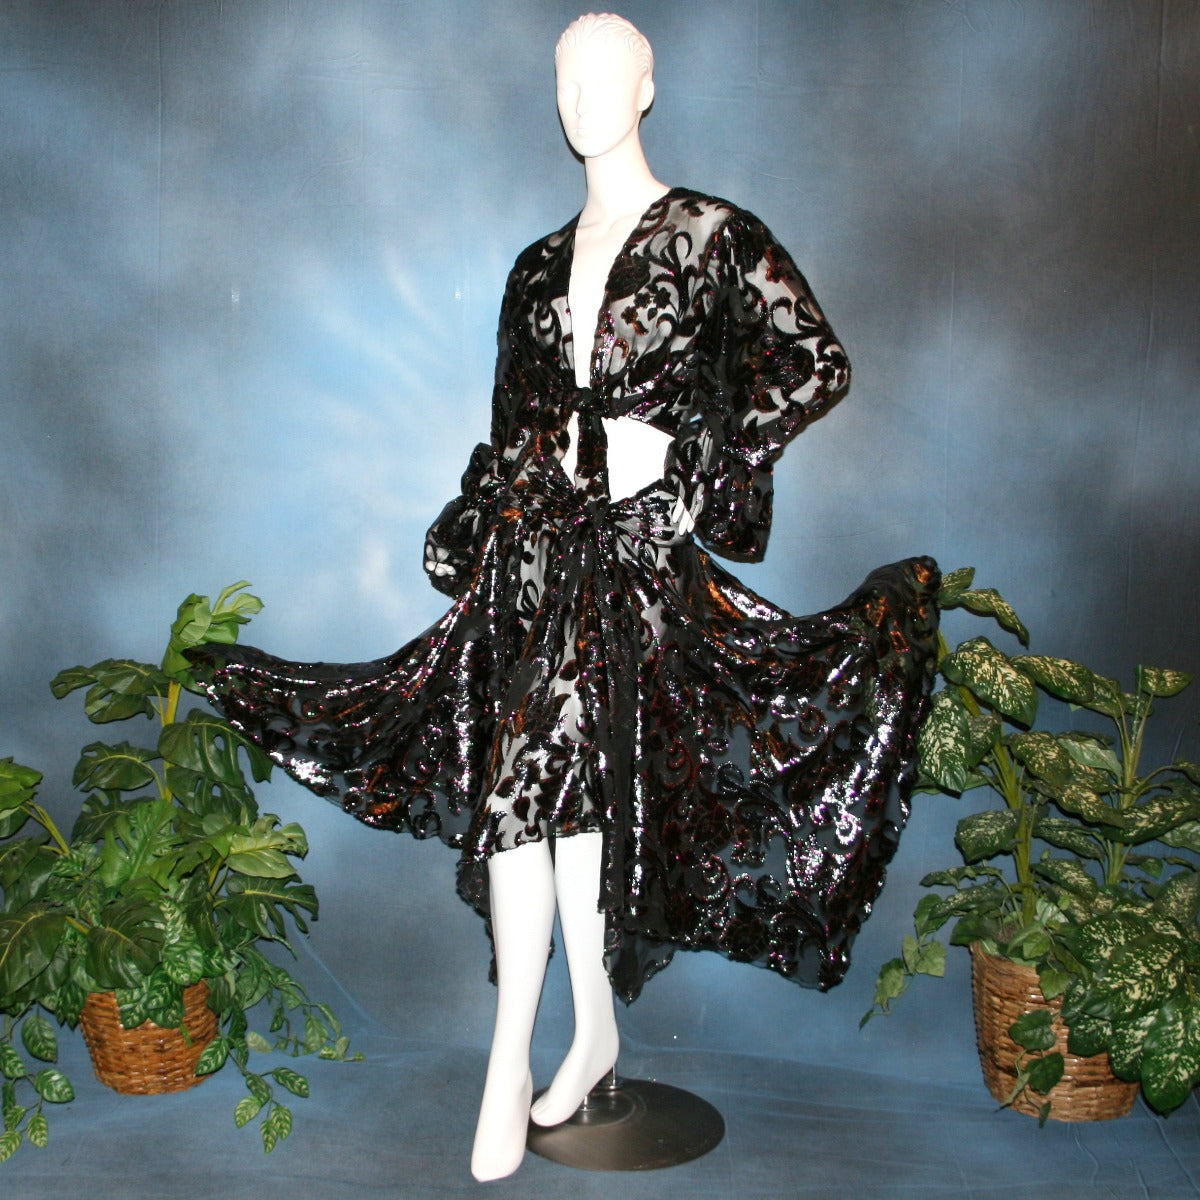 Crystal's Creations Wrap style panel ballroom skirt was created of black, fuchsia, & emerald green metallic burnout velvet